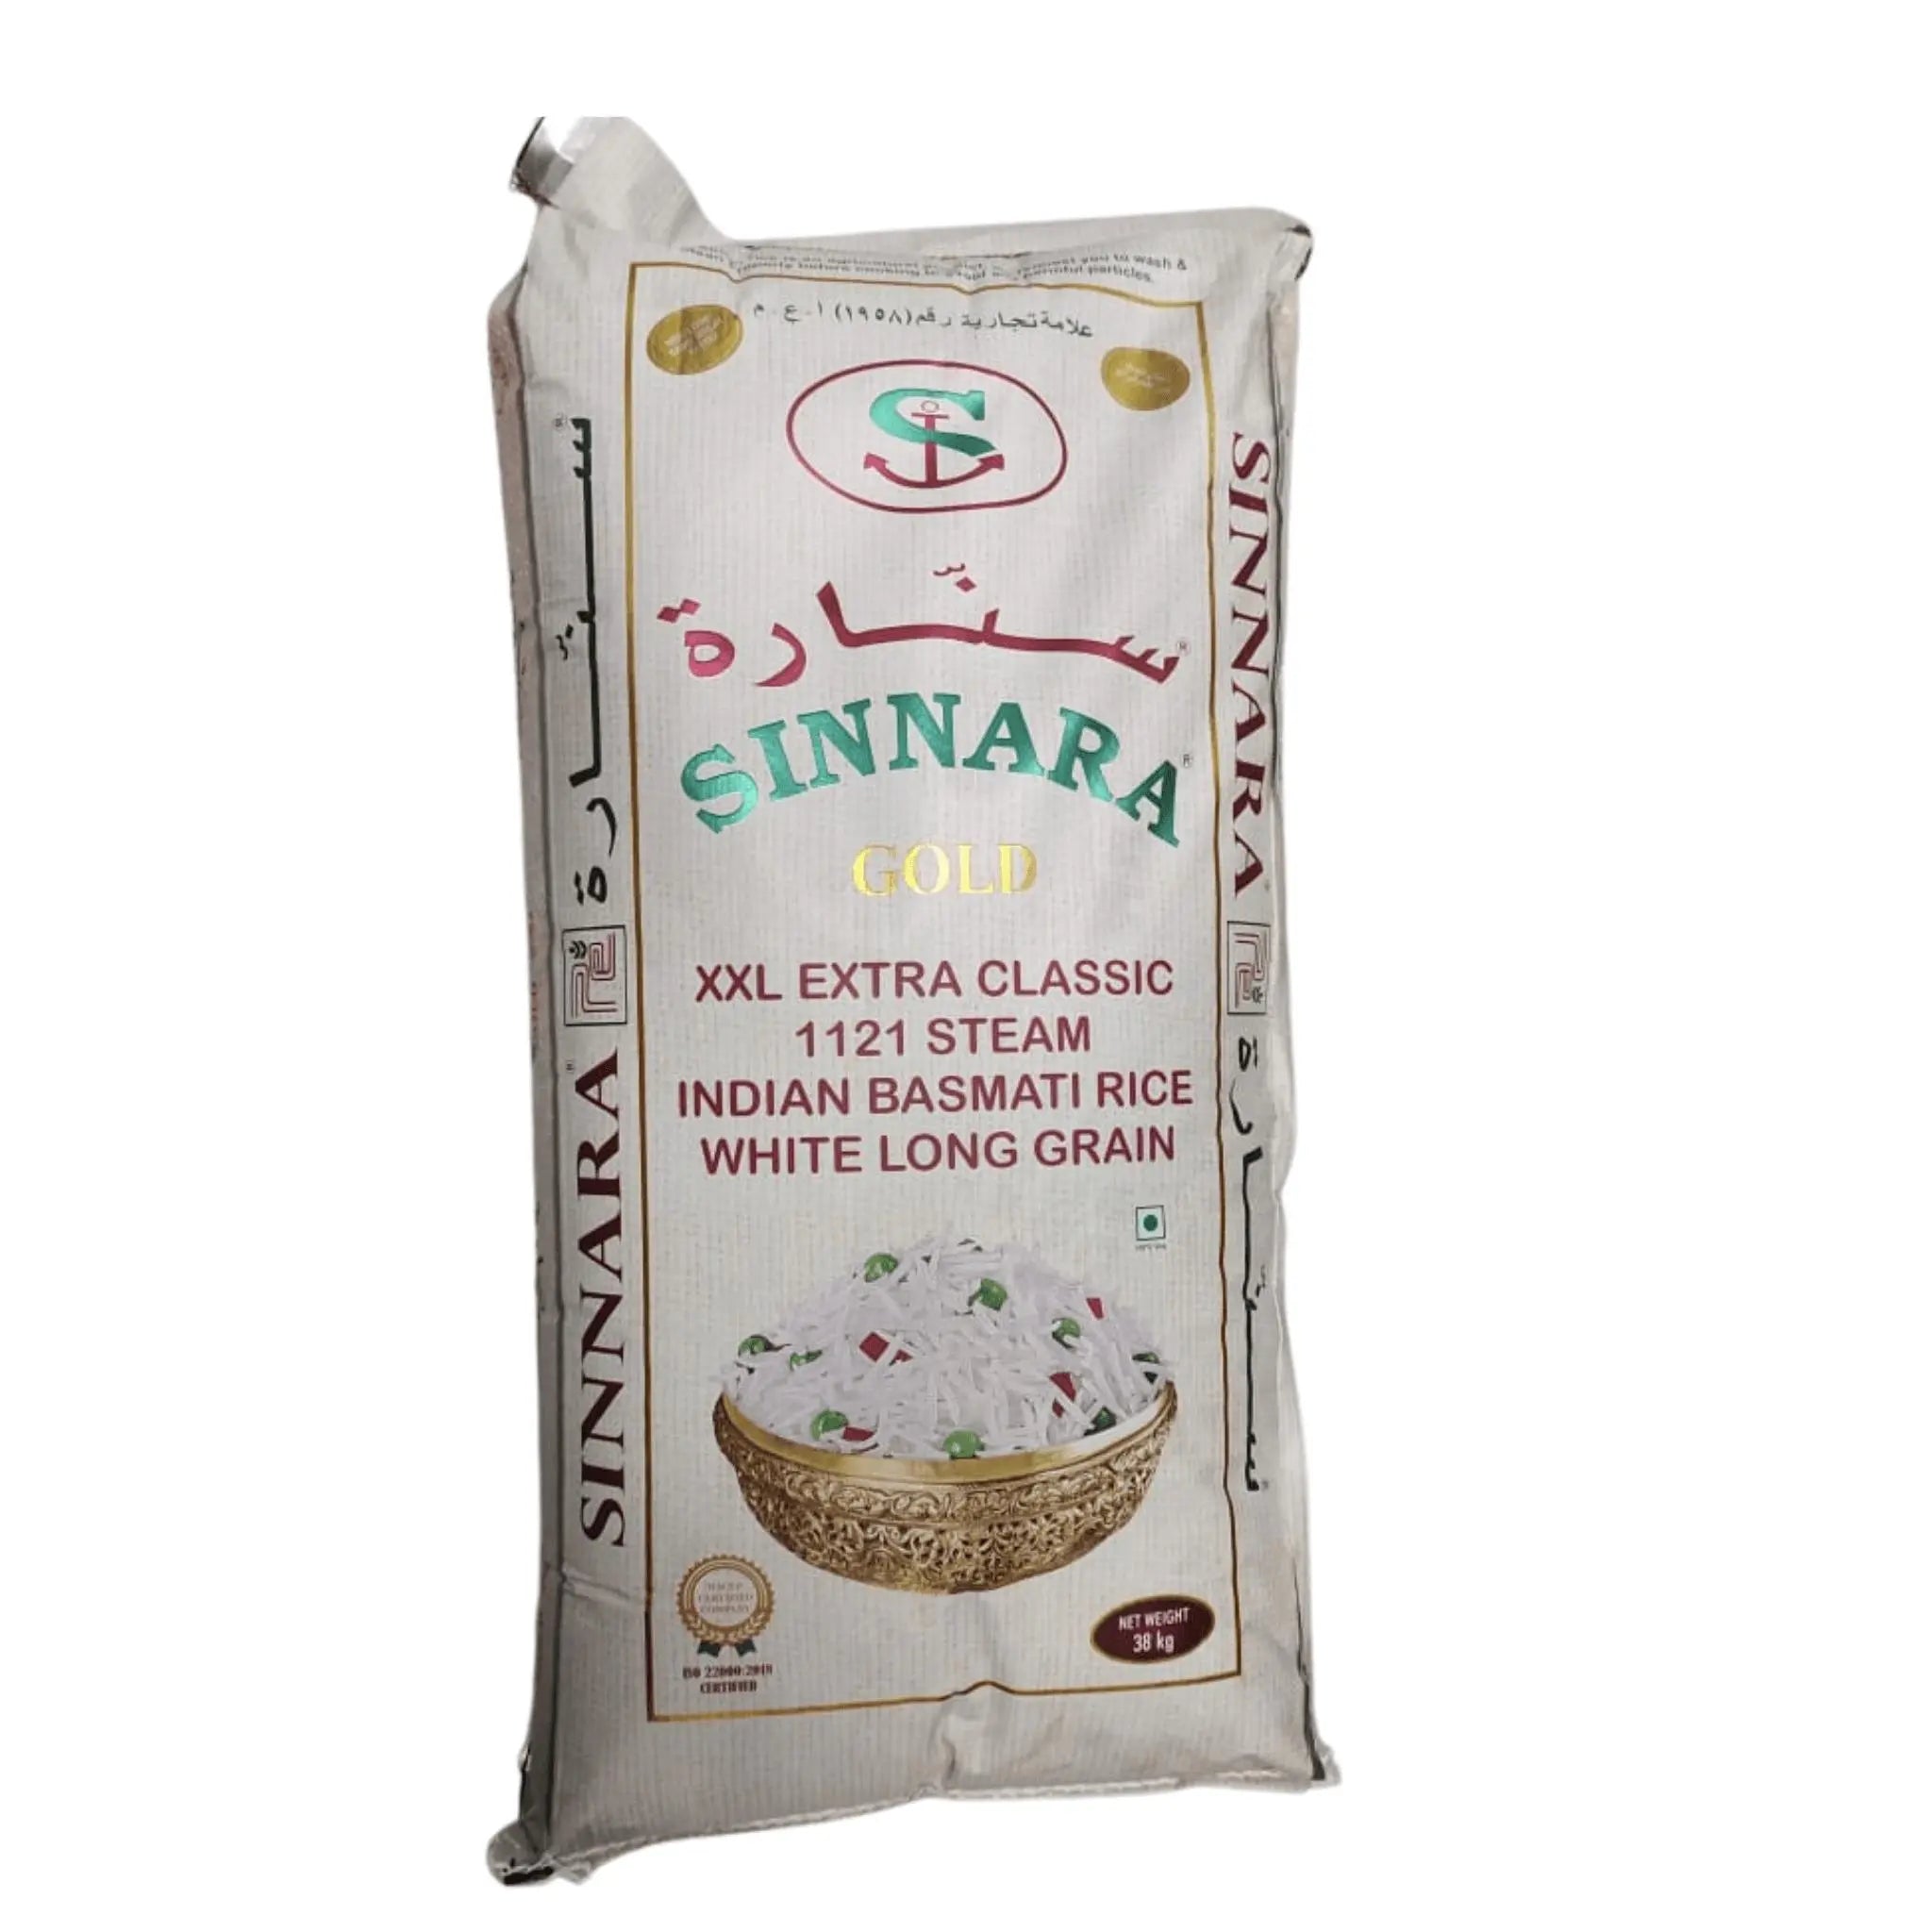 SINNARA Gold Basmati Rice-Ind 38 Kg - Marino.AE